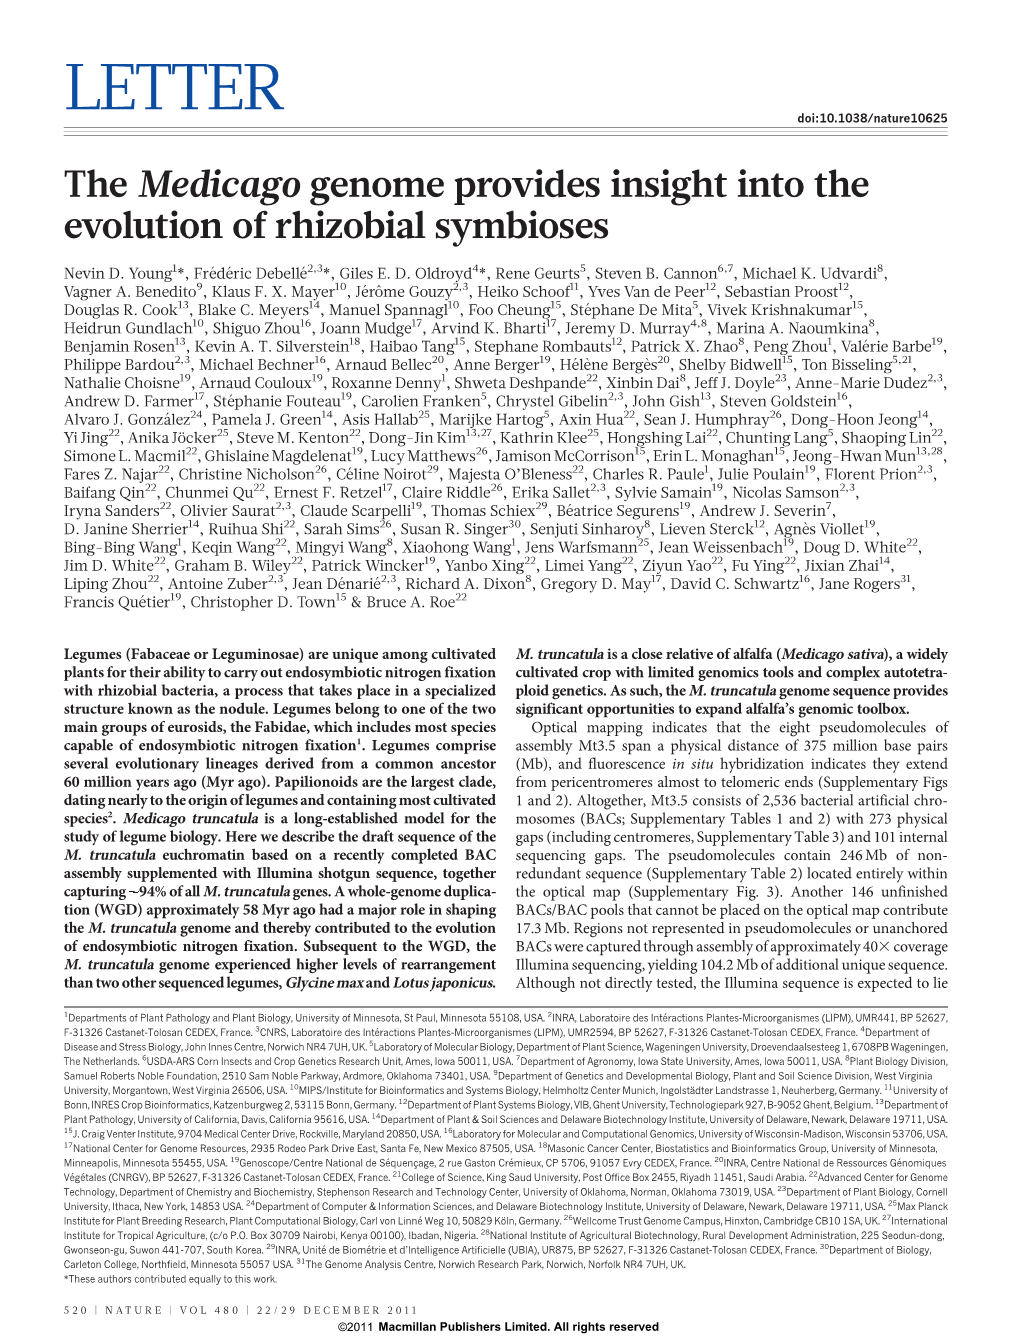 The Medicago Genome Provides Insight Into the Evolution of Rhizobial Symbioses